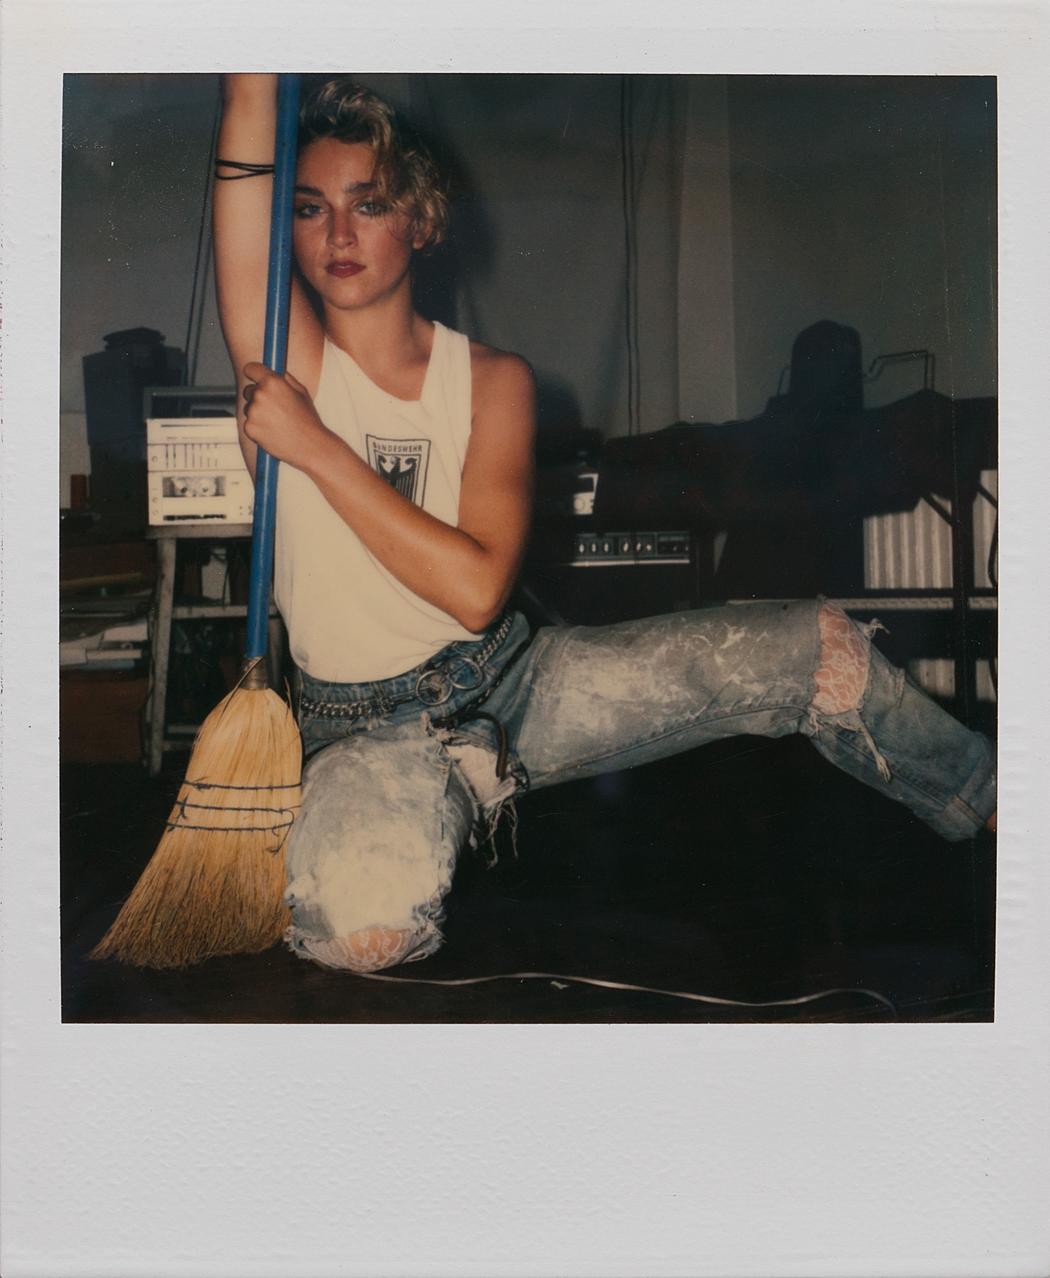 Richard Corman, Madonna. Polaroid 1983